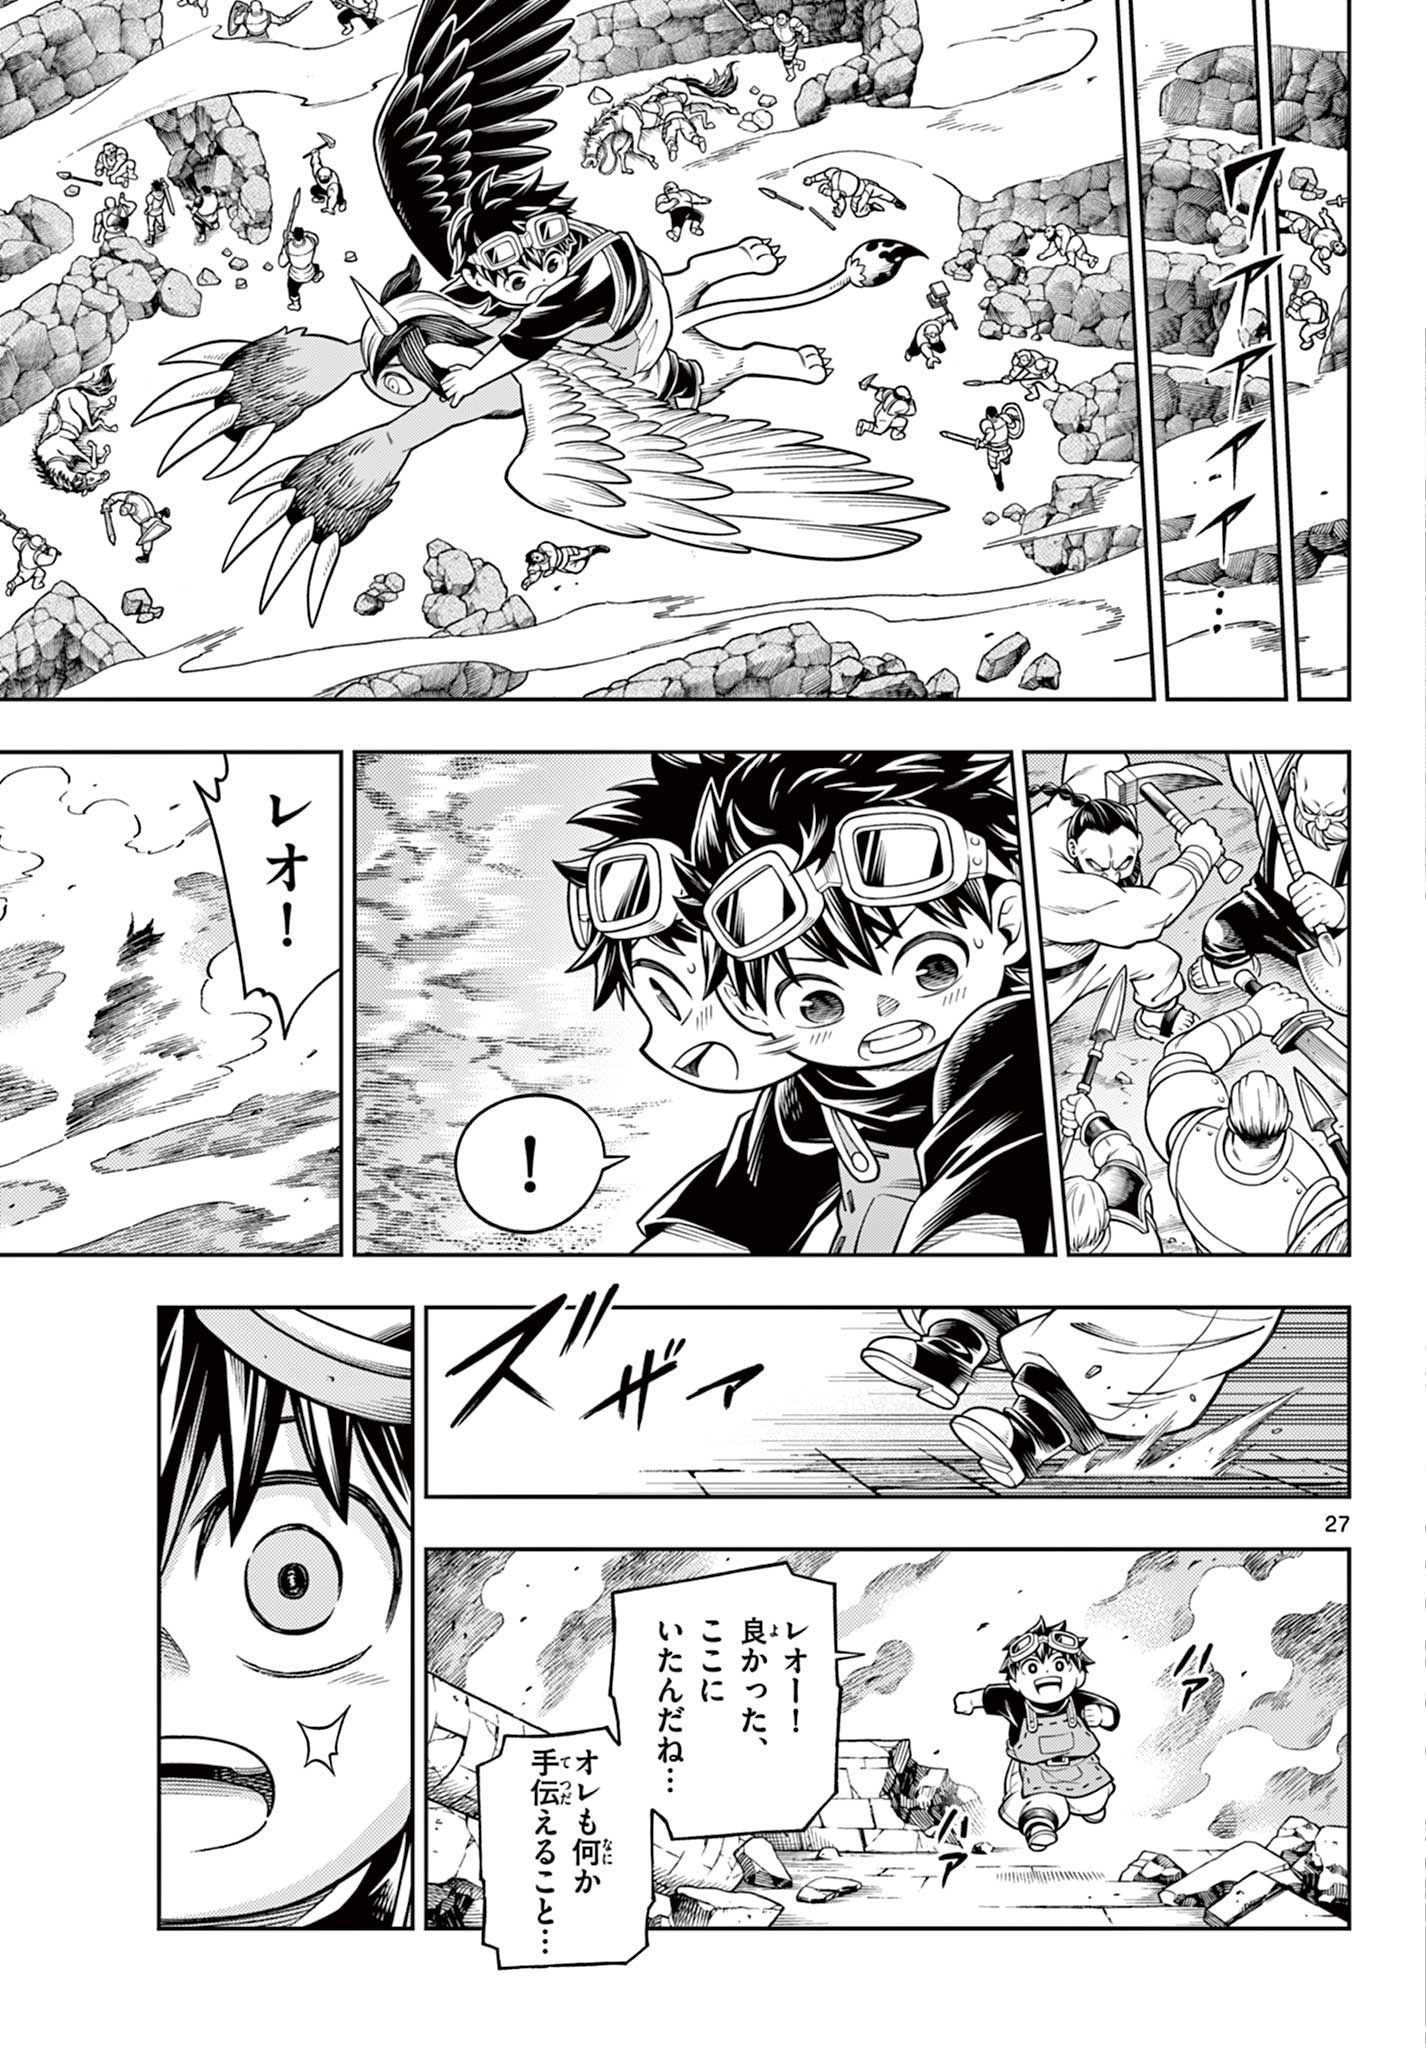 Soara to Mamono no ie - Chapter 28 - Page 27